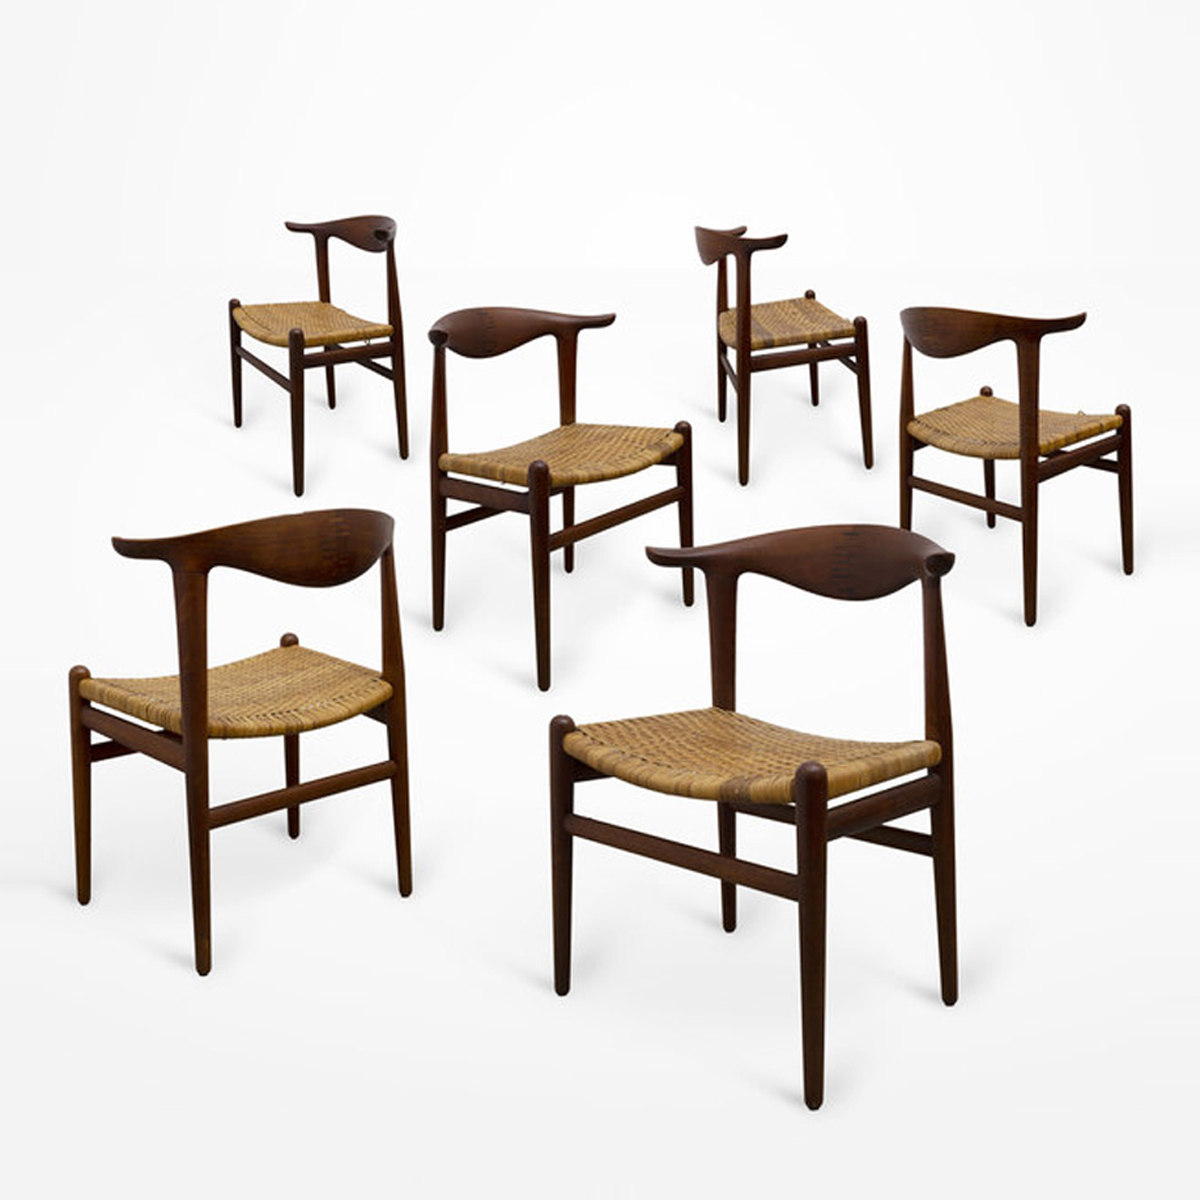 Cowhorn chairs